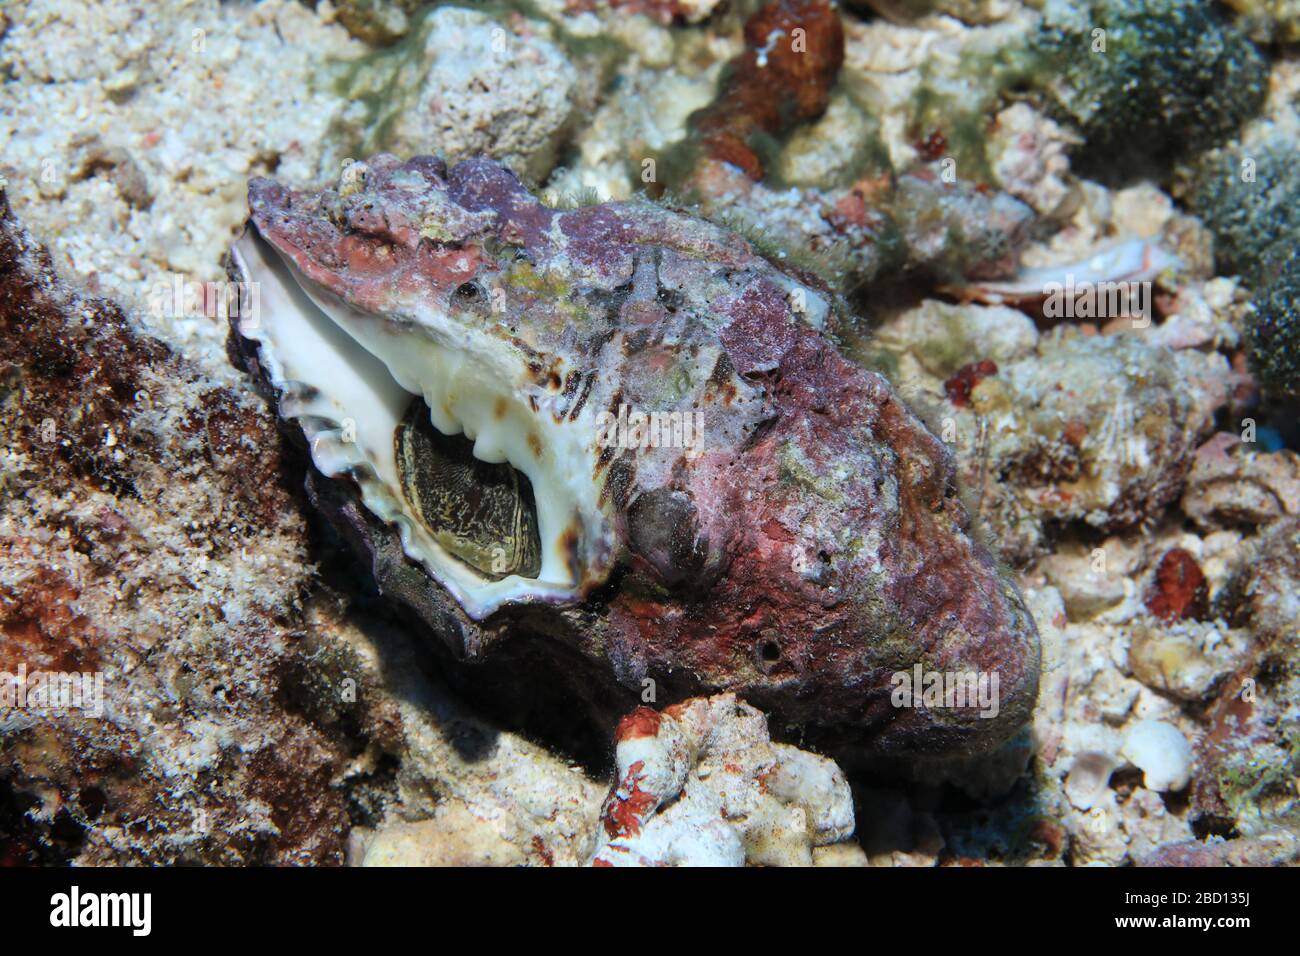 Short-tailed latirus sea snail (Latirus polygonus) underwater in the tropical coral reef of the Indian Ocean Stock Photo